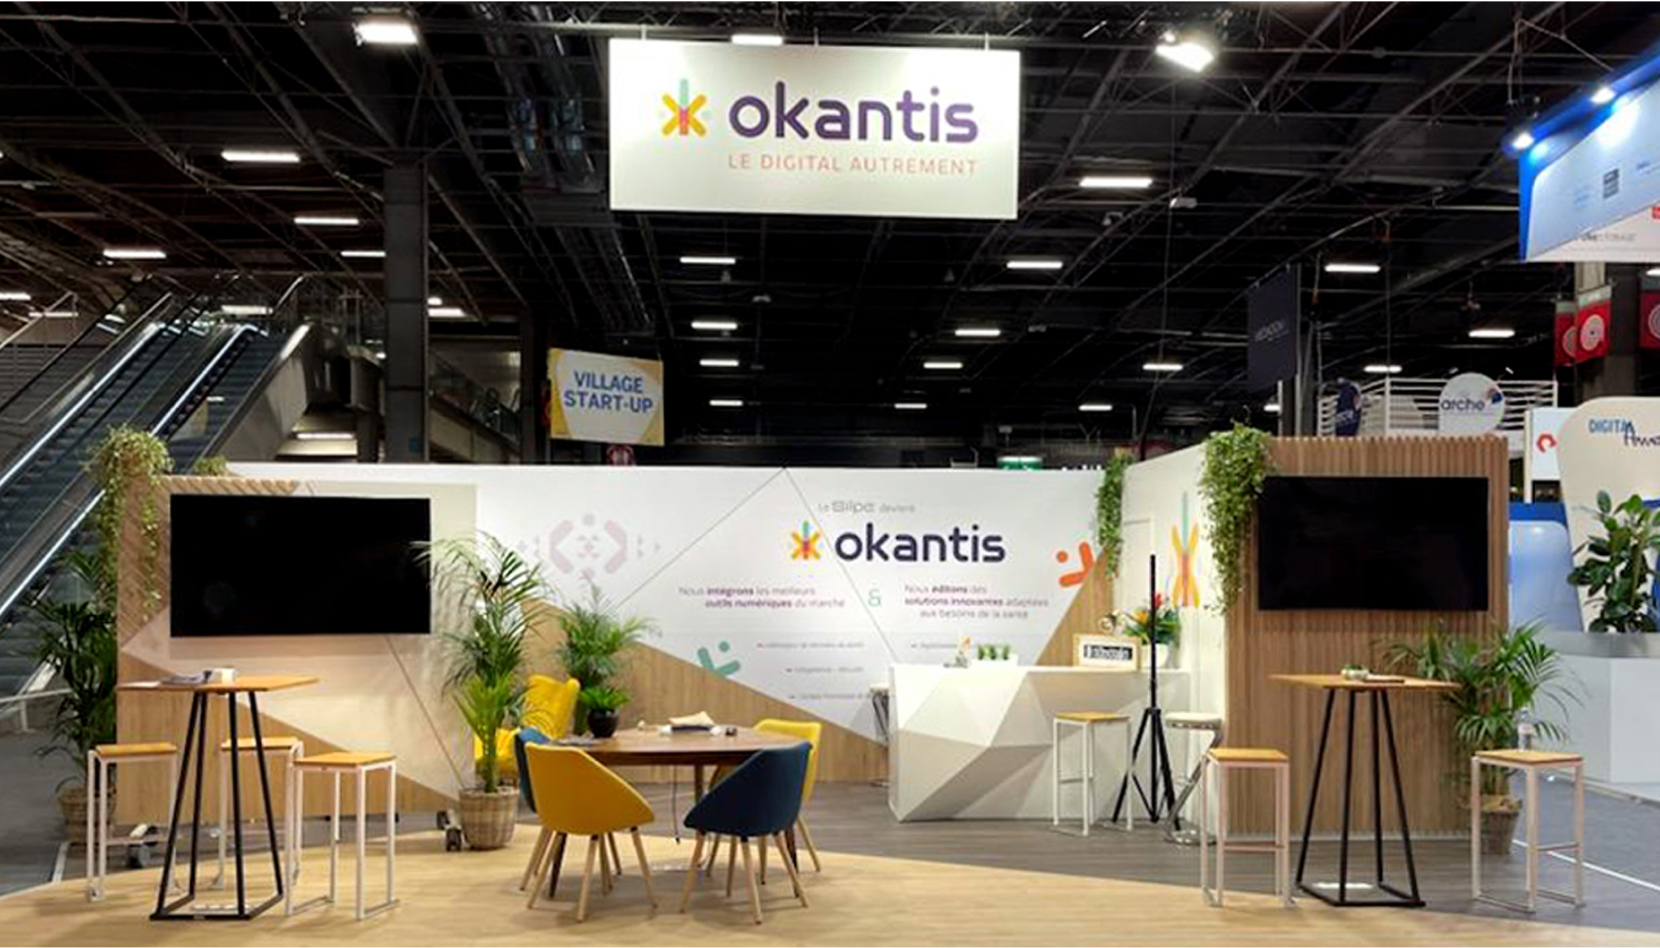 Agence Pixine : vue globale du stand Okantis